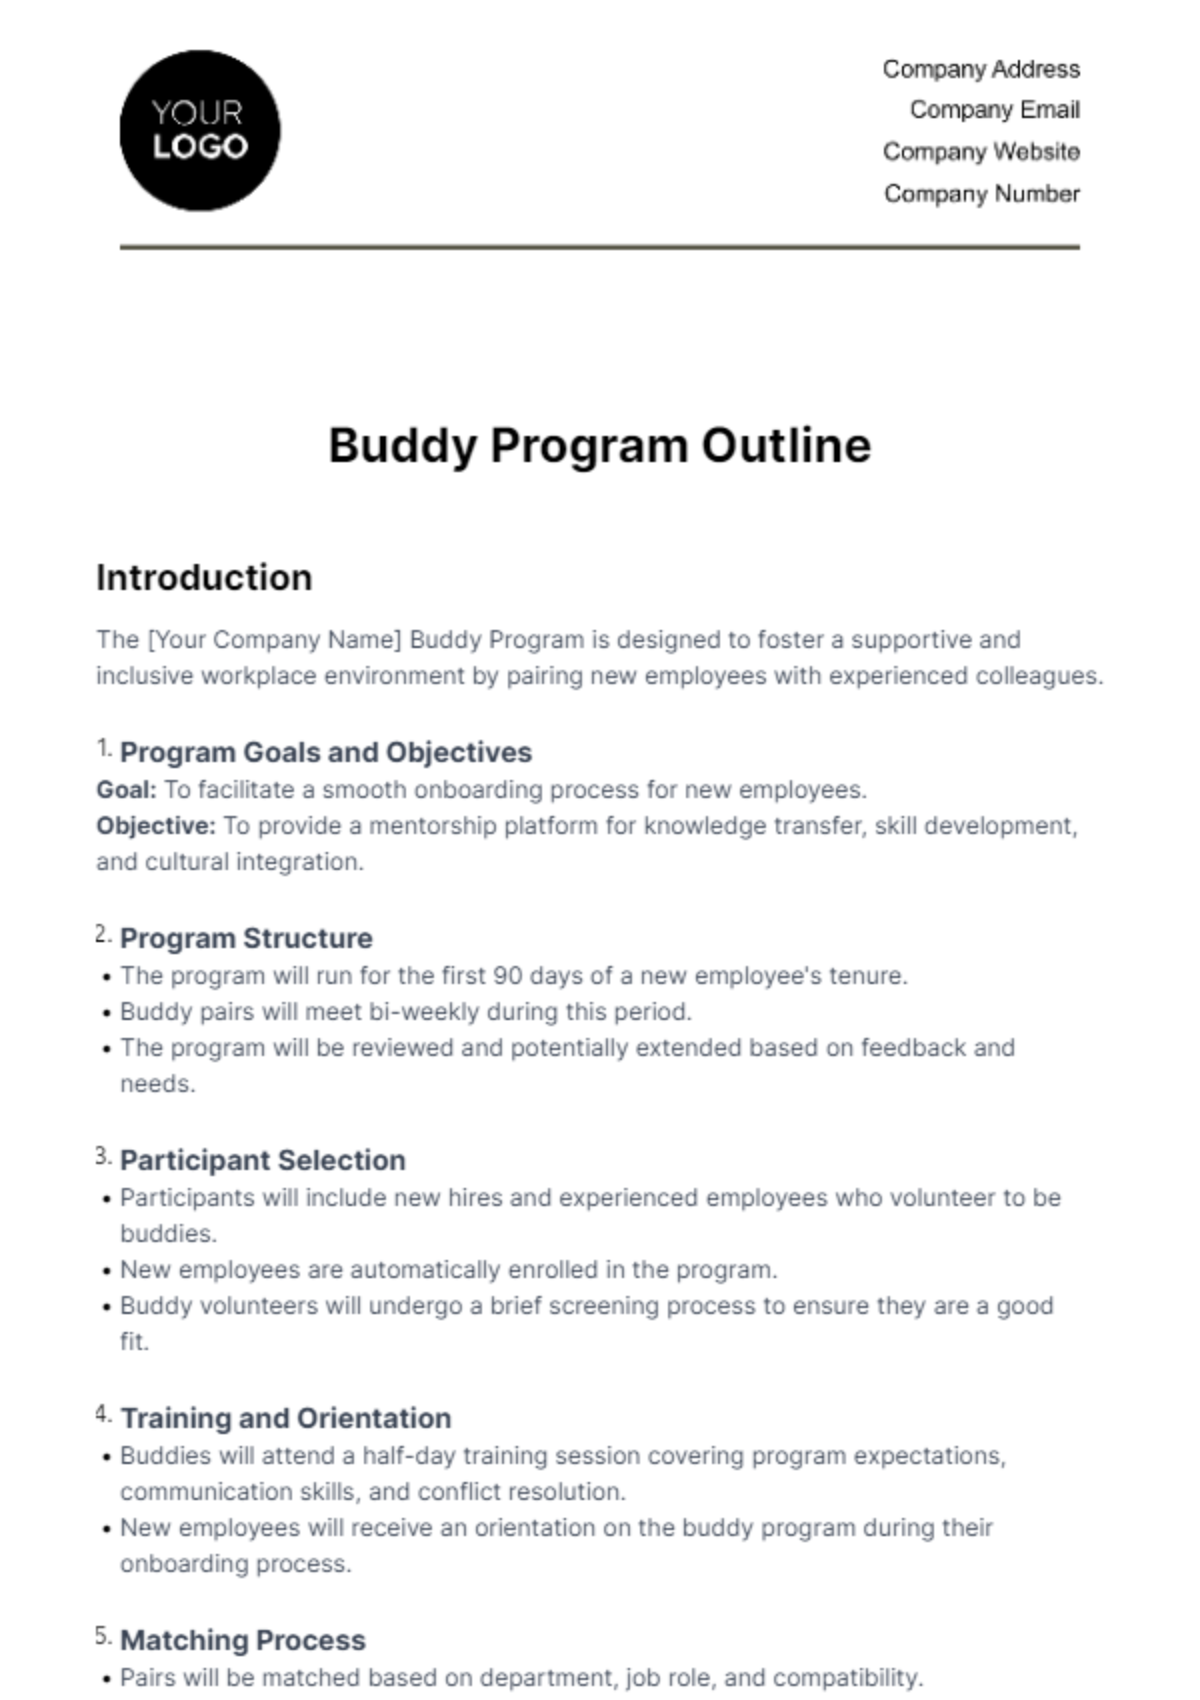 Free Buddy Program Outline HR Template